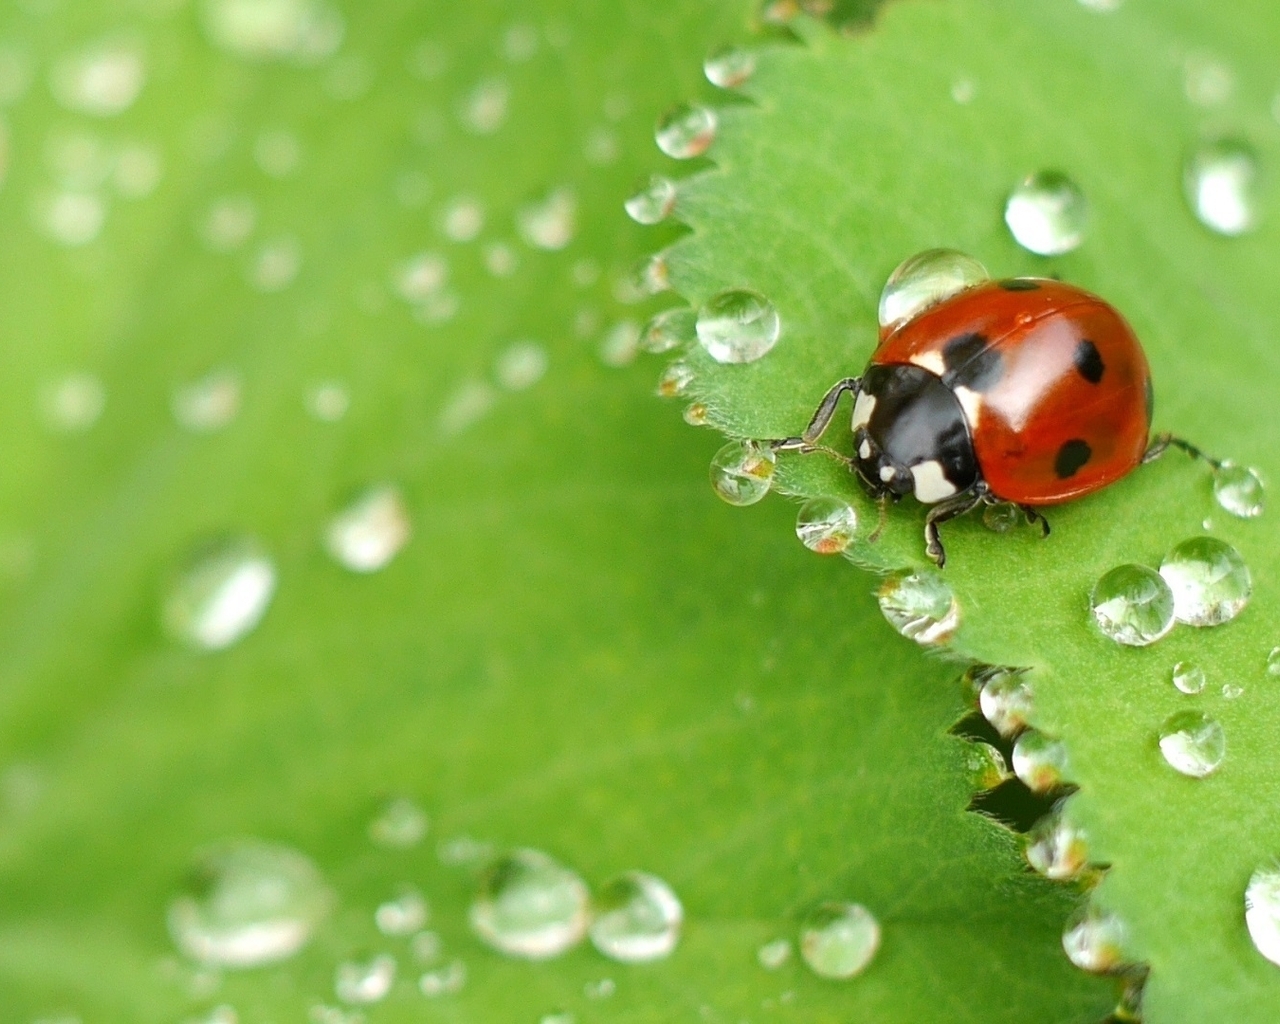 Image: Leaf, drops, dew, ladybug, sitting, macro